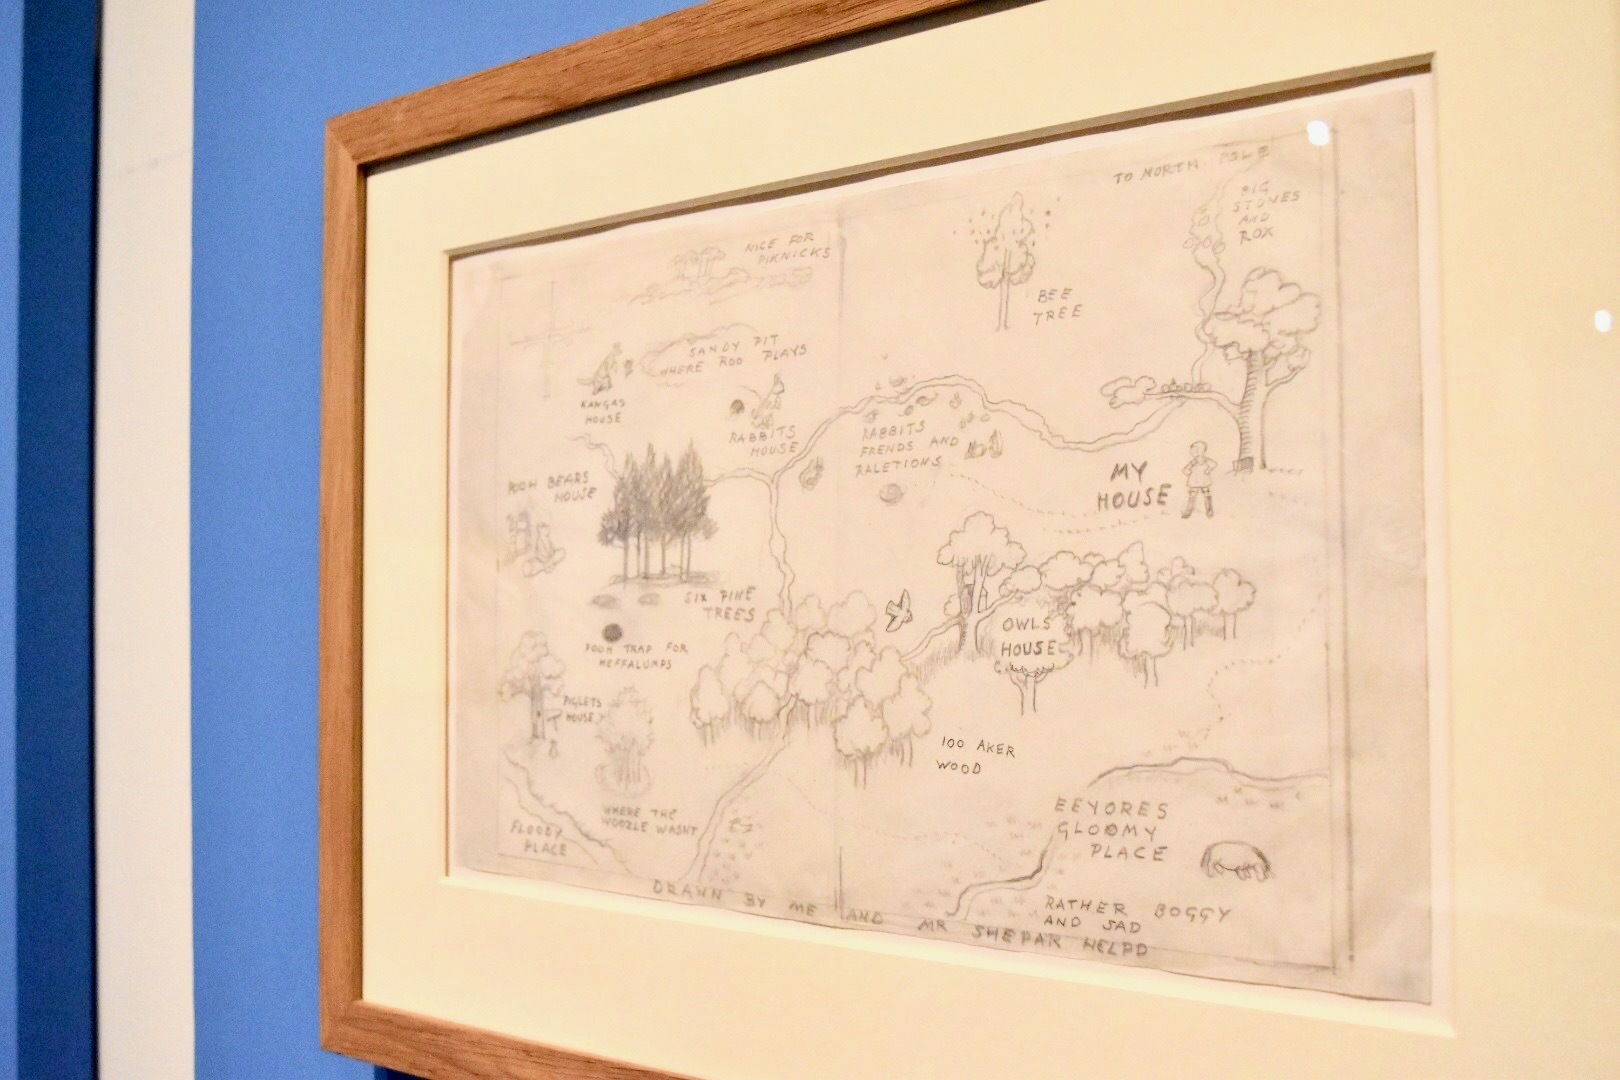 E.H.シェパード　百ちょ森（百町森）の地図『クマのプーさん』見返し　1926年　ヴィクトリア・アンド・アルバート博物館所蔵